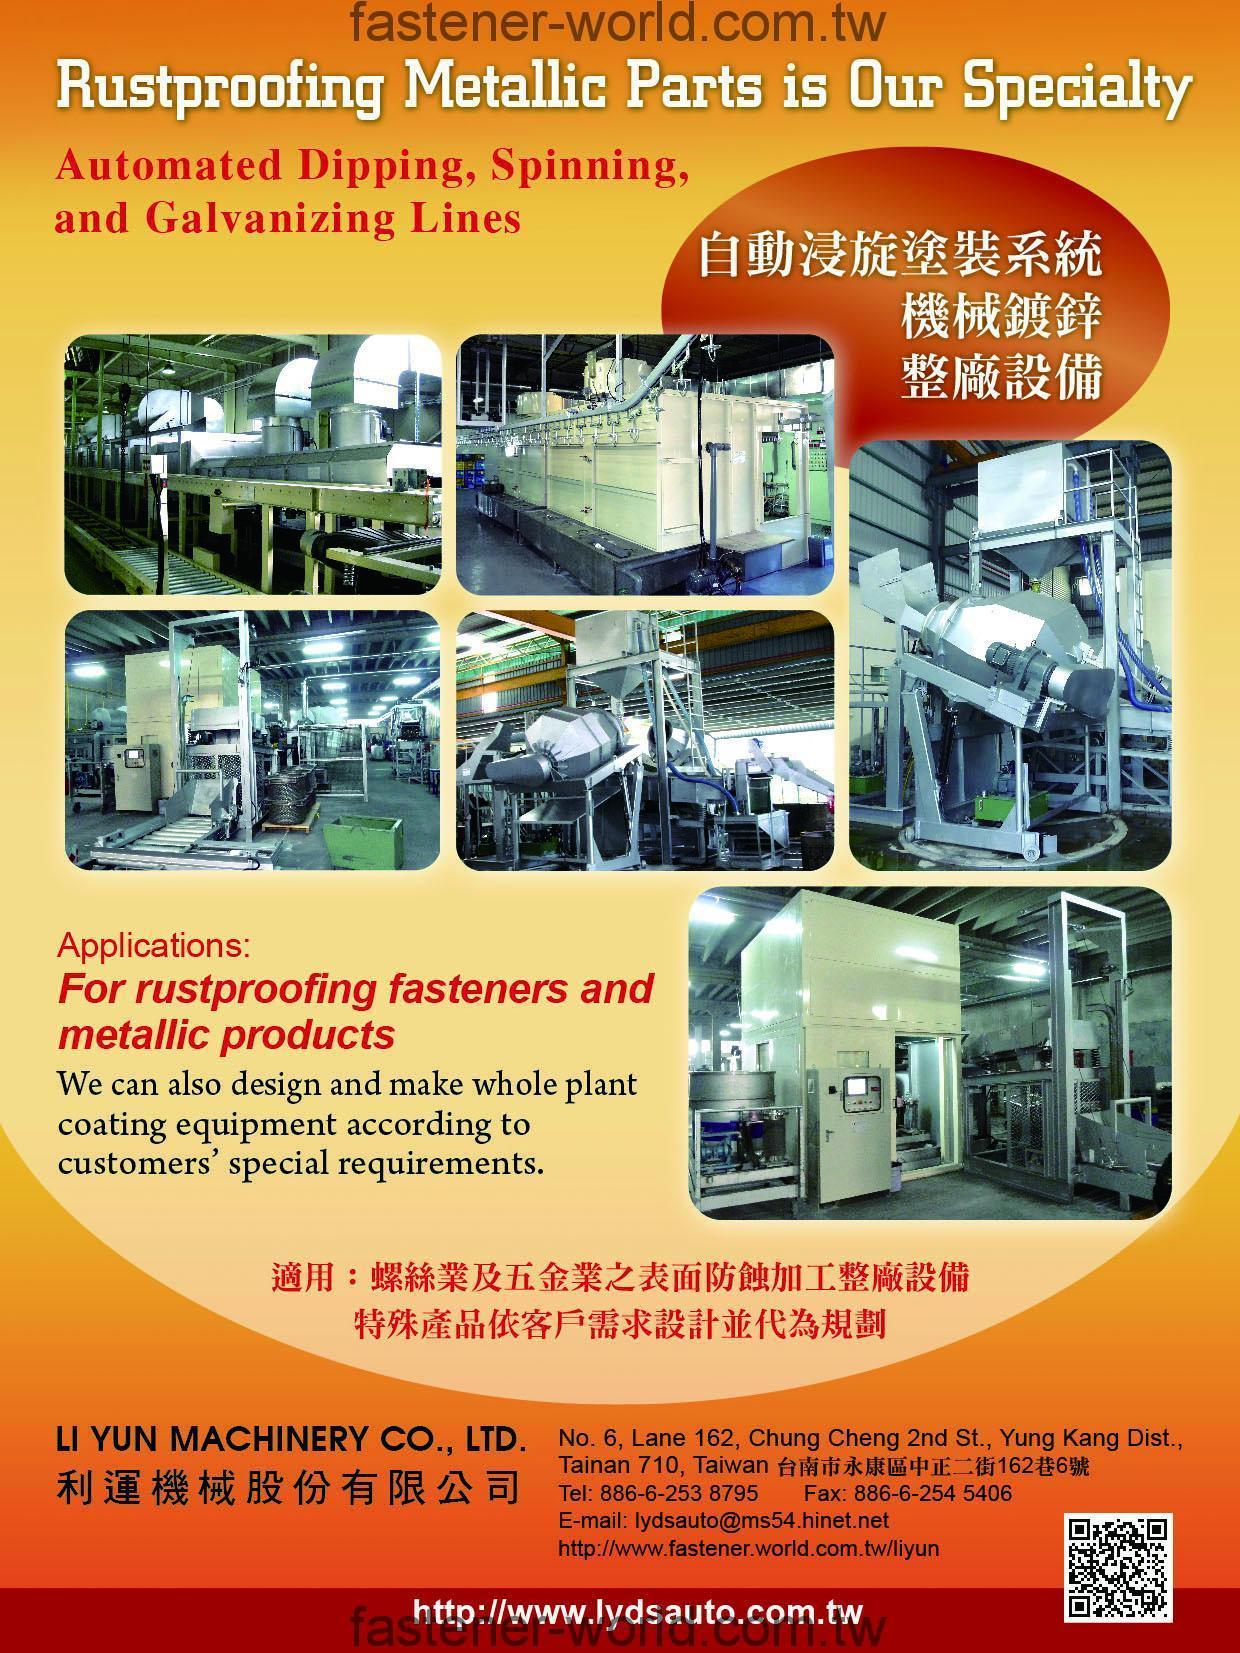 LI YUN MACHINERY CO., LTD. Online Catalogues